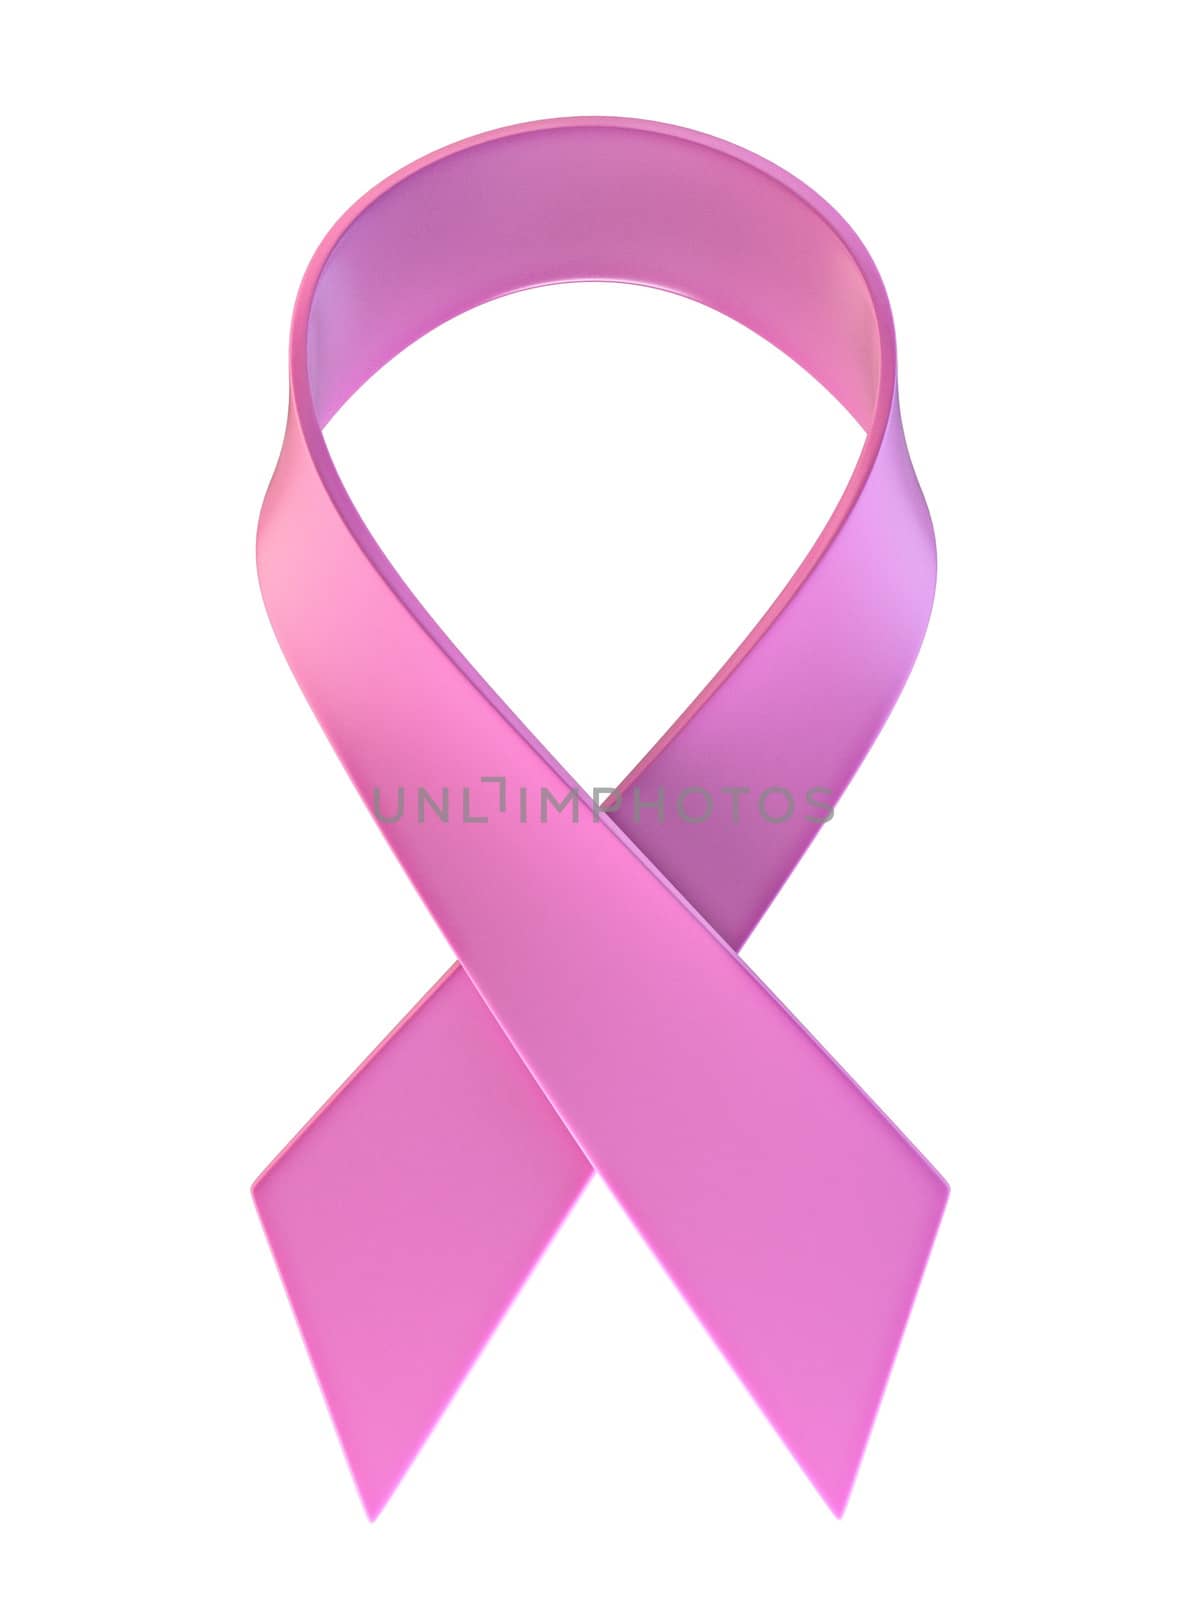 Pink cancer awareness ribbon 3D render illustration isolated on white background